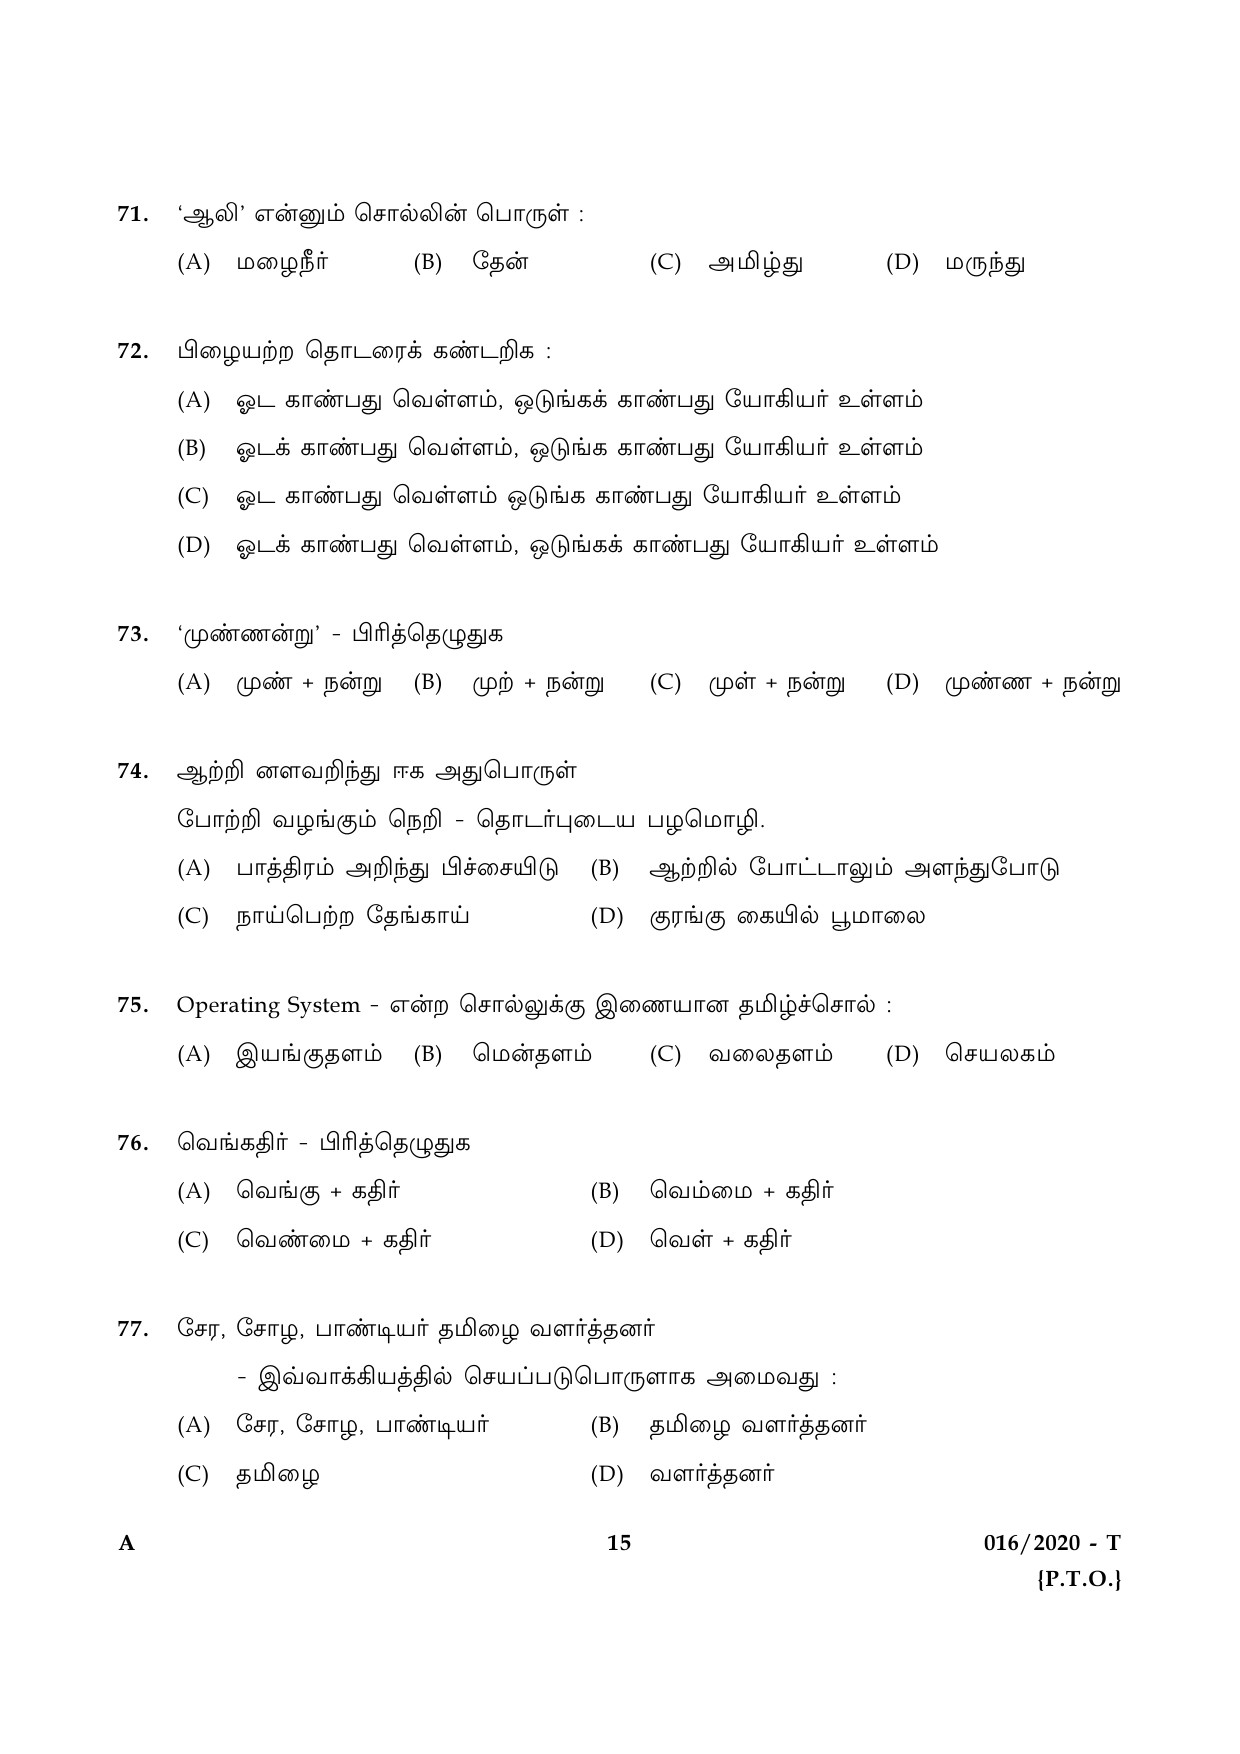 KAS Officer Trainee Tamil Exam 2020 Code 0162020 14